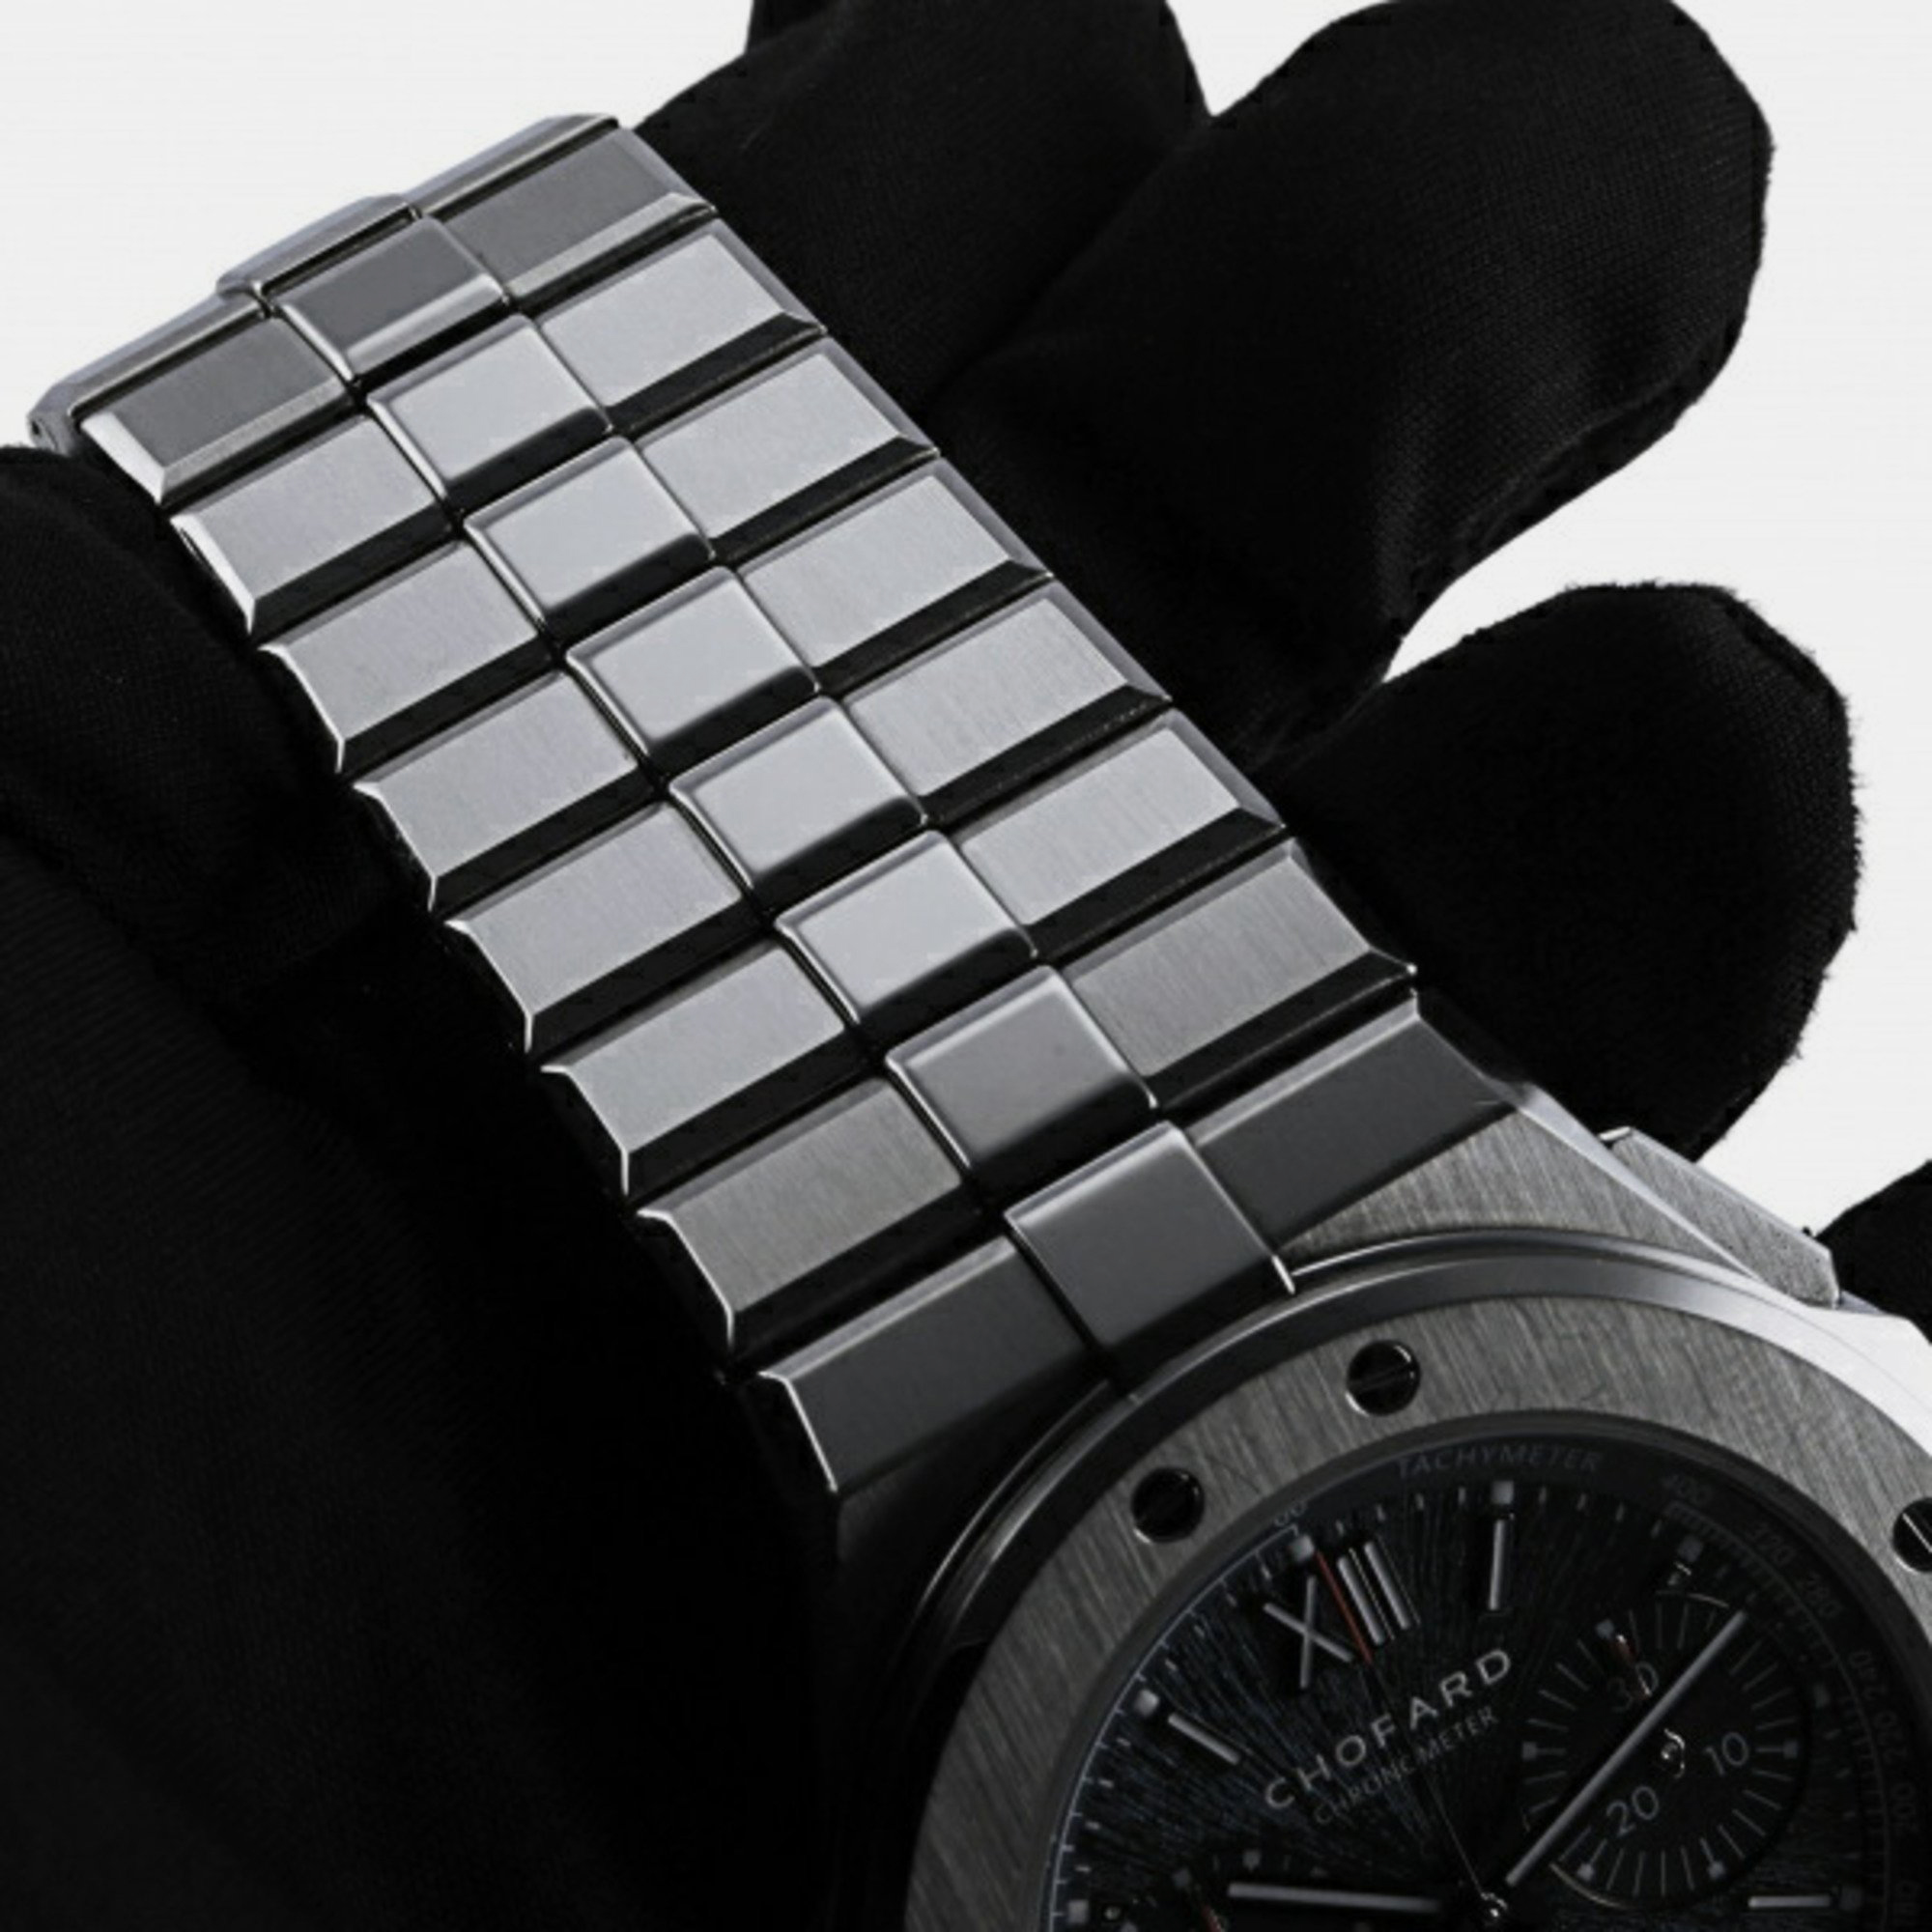 Chopard Blue Stainless Steel Alpine Eagle 298609-3001 Automatic Men's Wristwatch 44 Mm